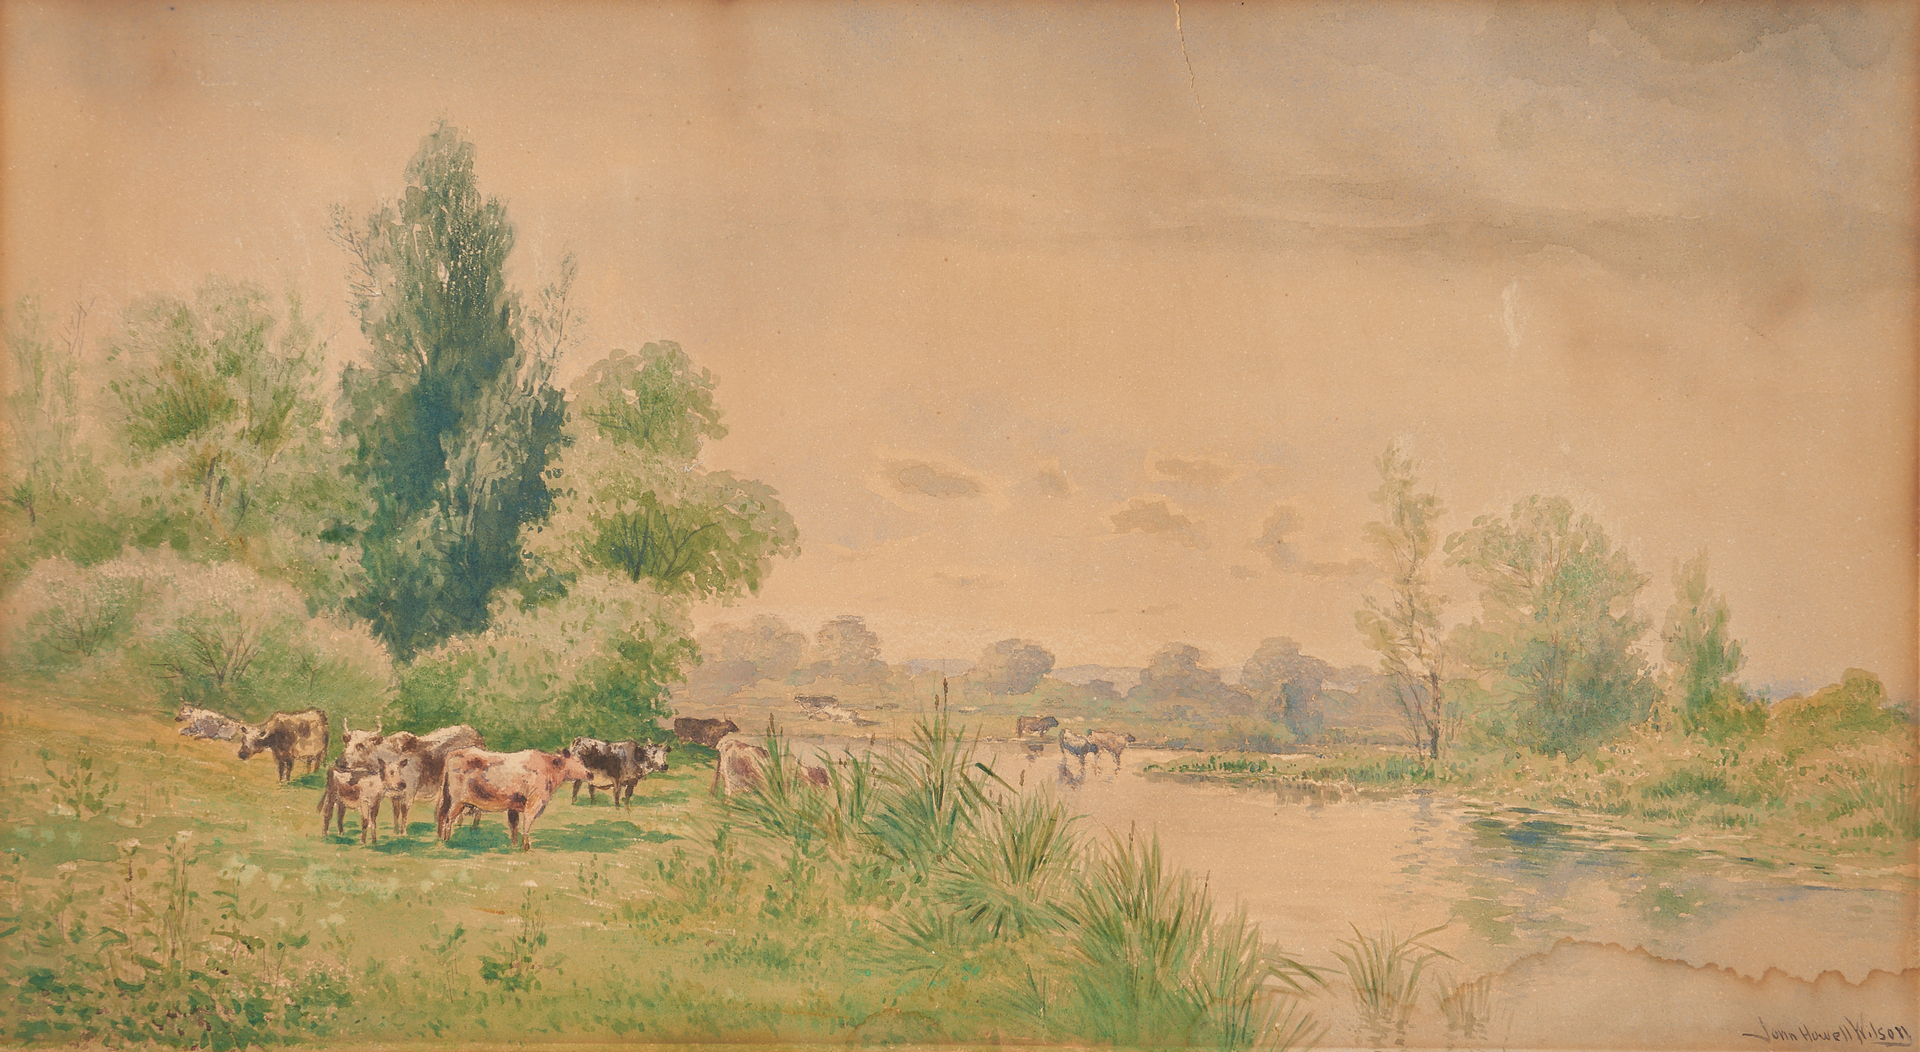 Lot 448: John Howell Wilson Watercolor Landscape of Cows